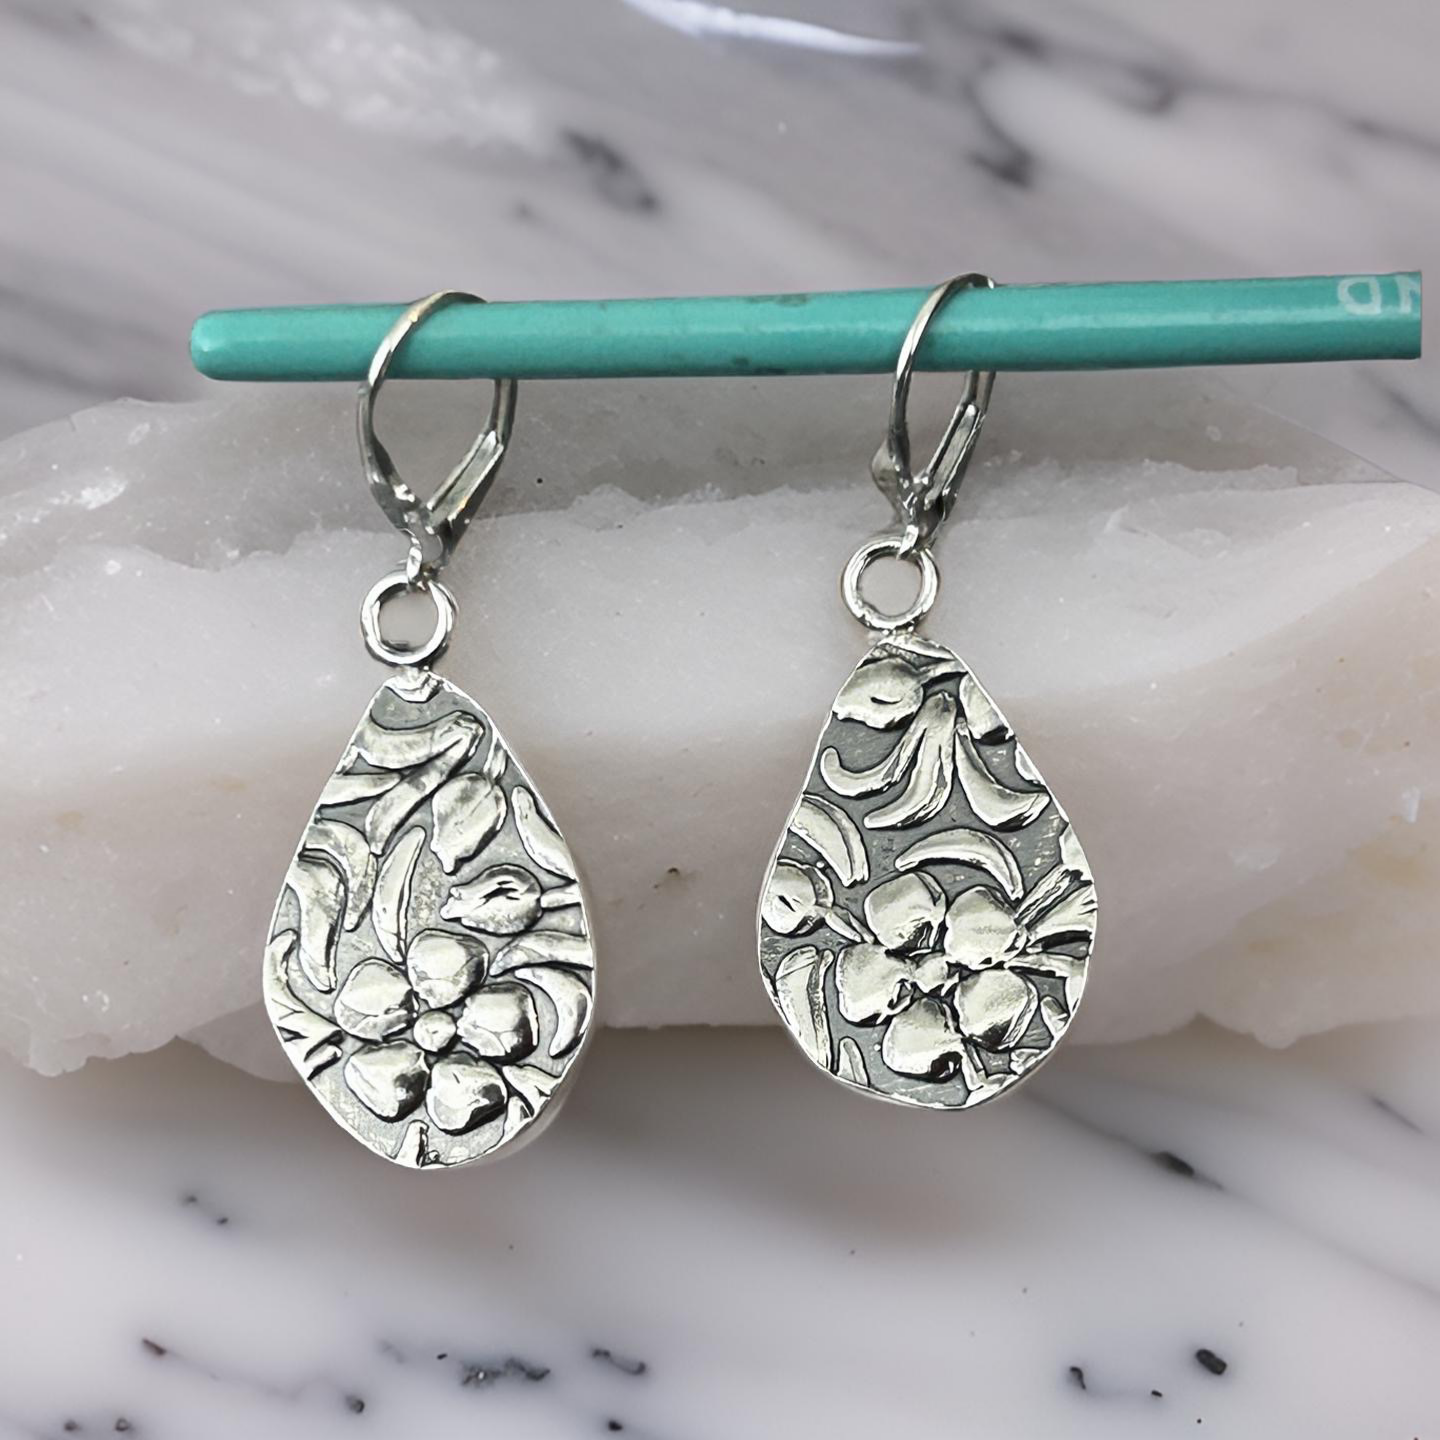 sterling silver floral design earrings